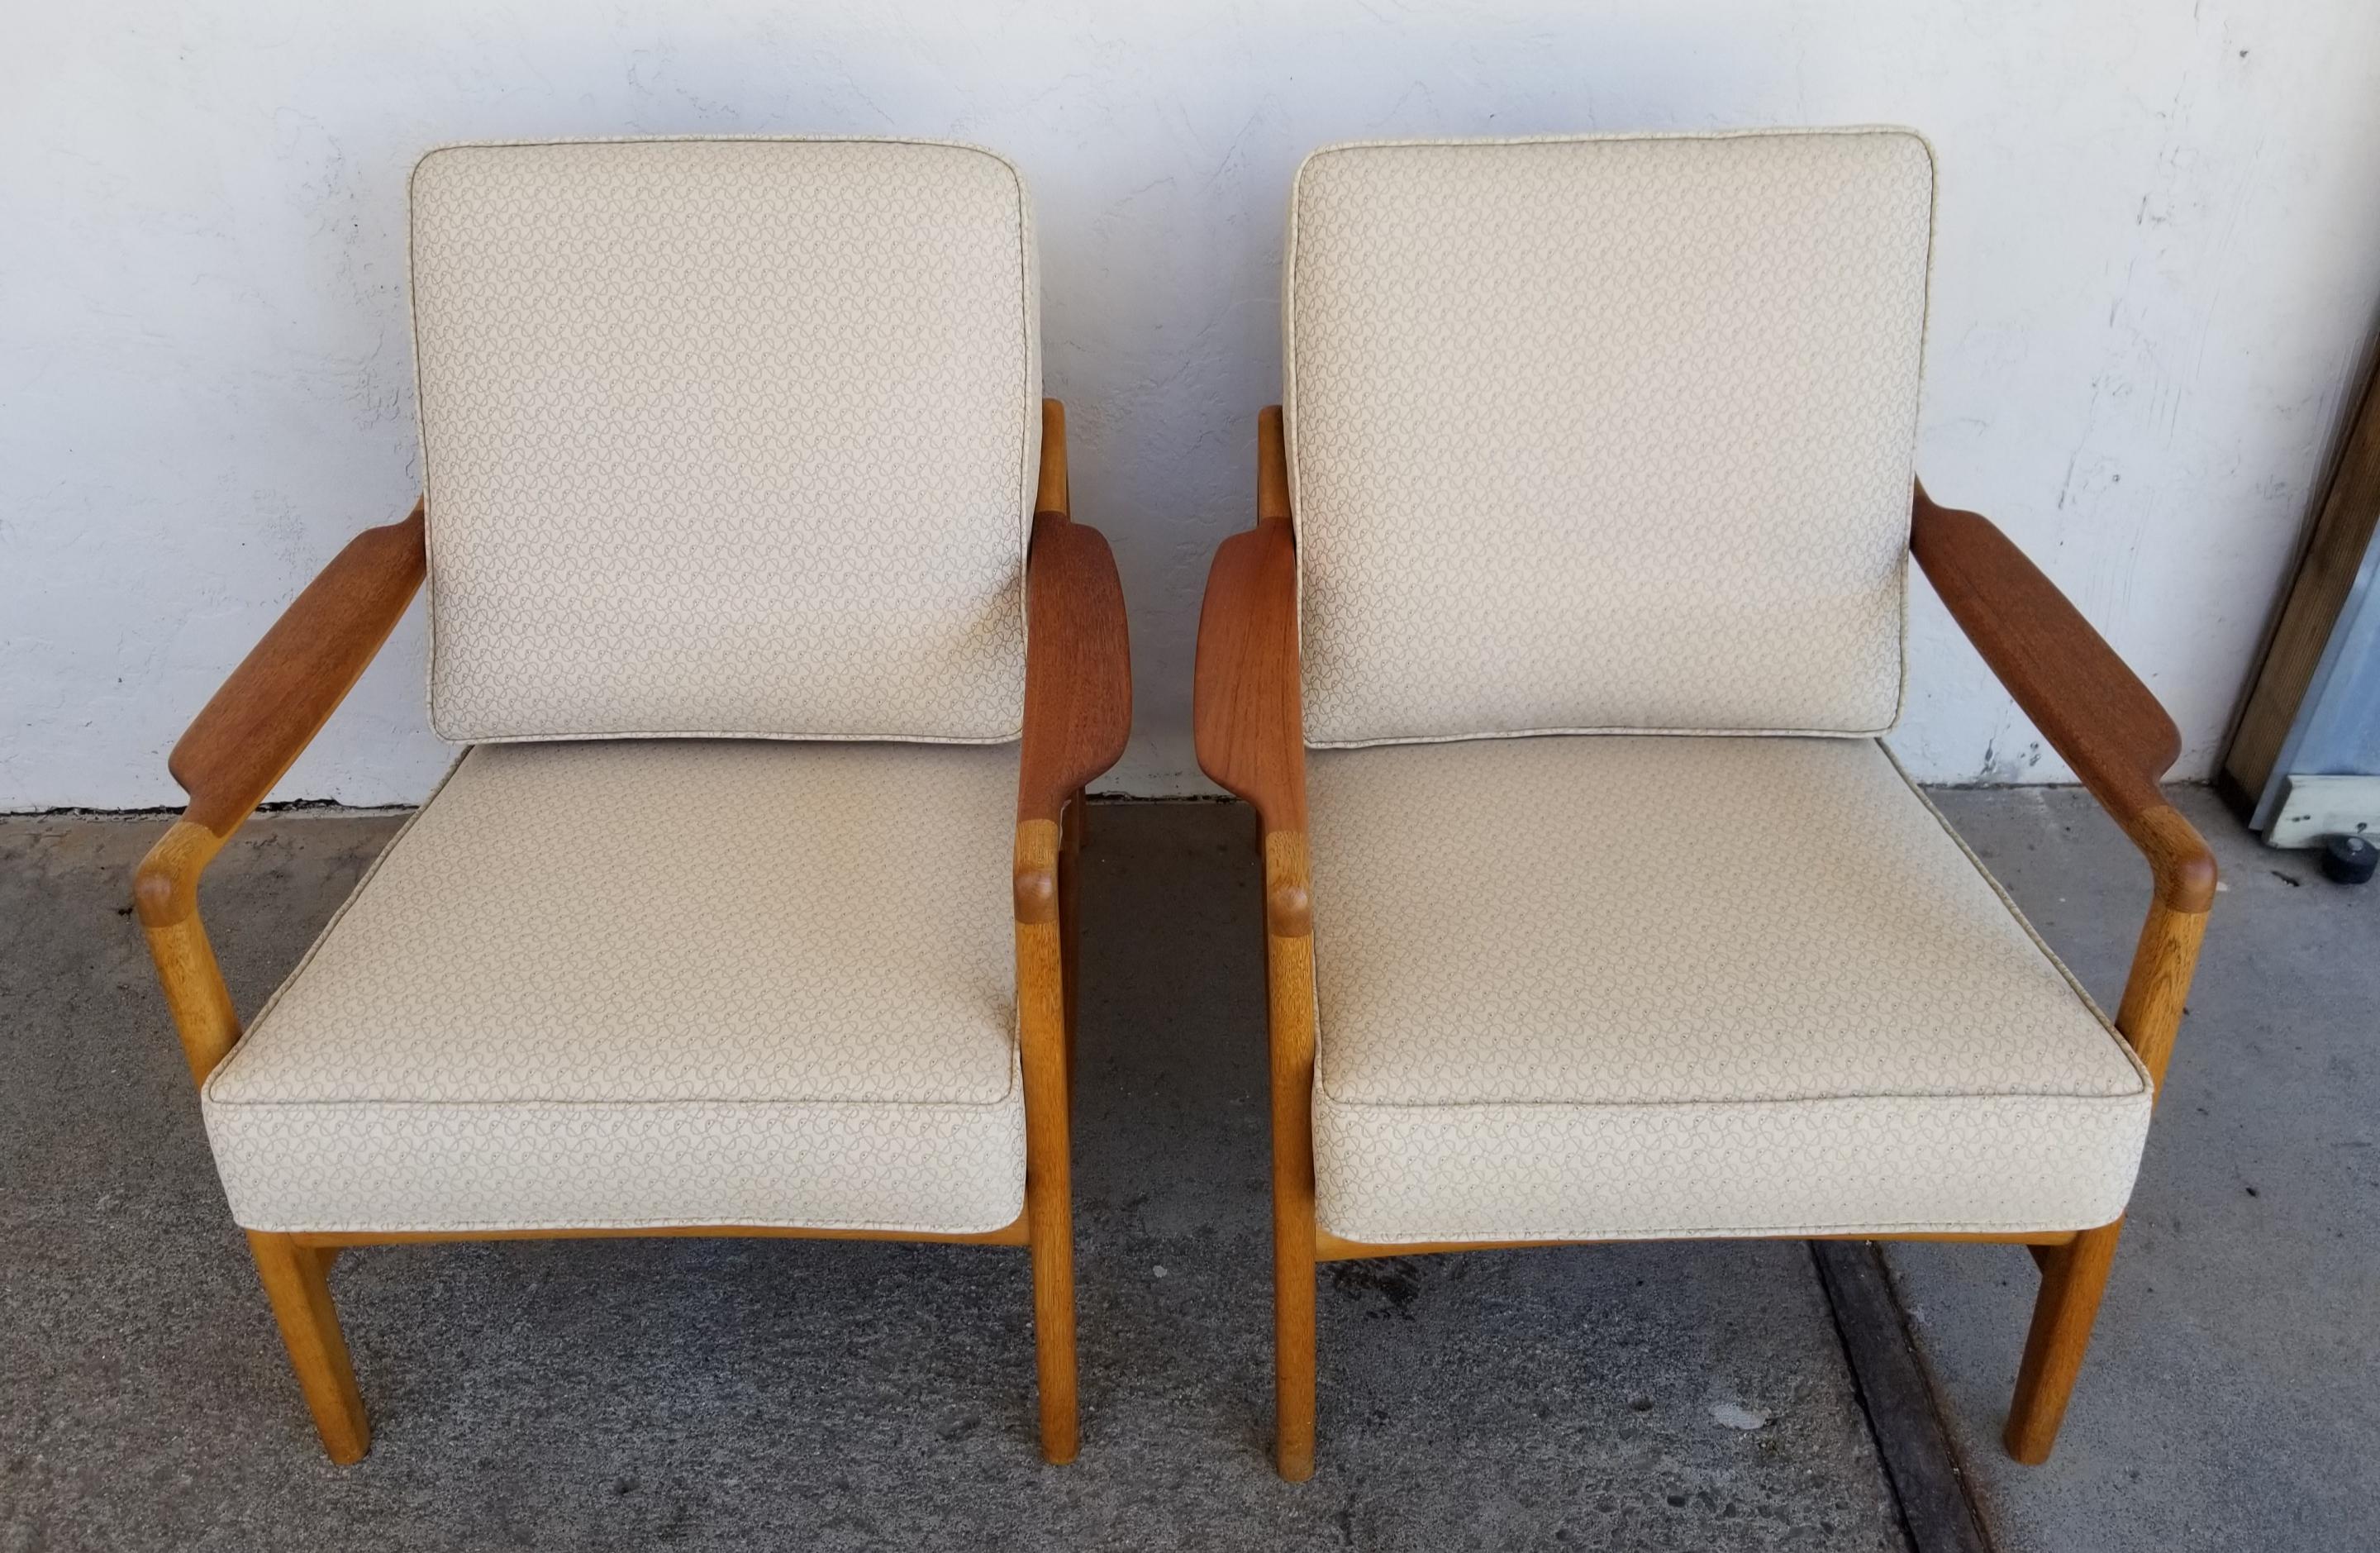 20th Century Teak & Oak Lounge Chairs by Tove & Edvard Kindt-Larsen